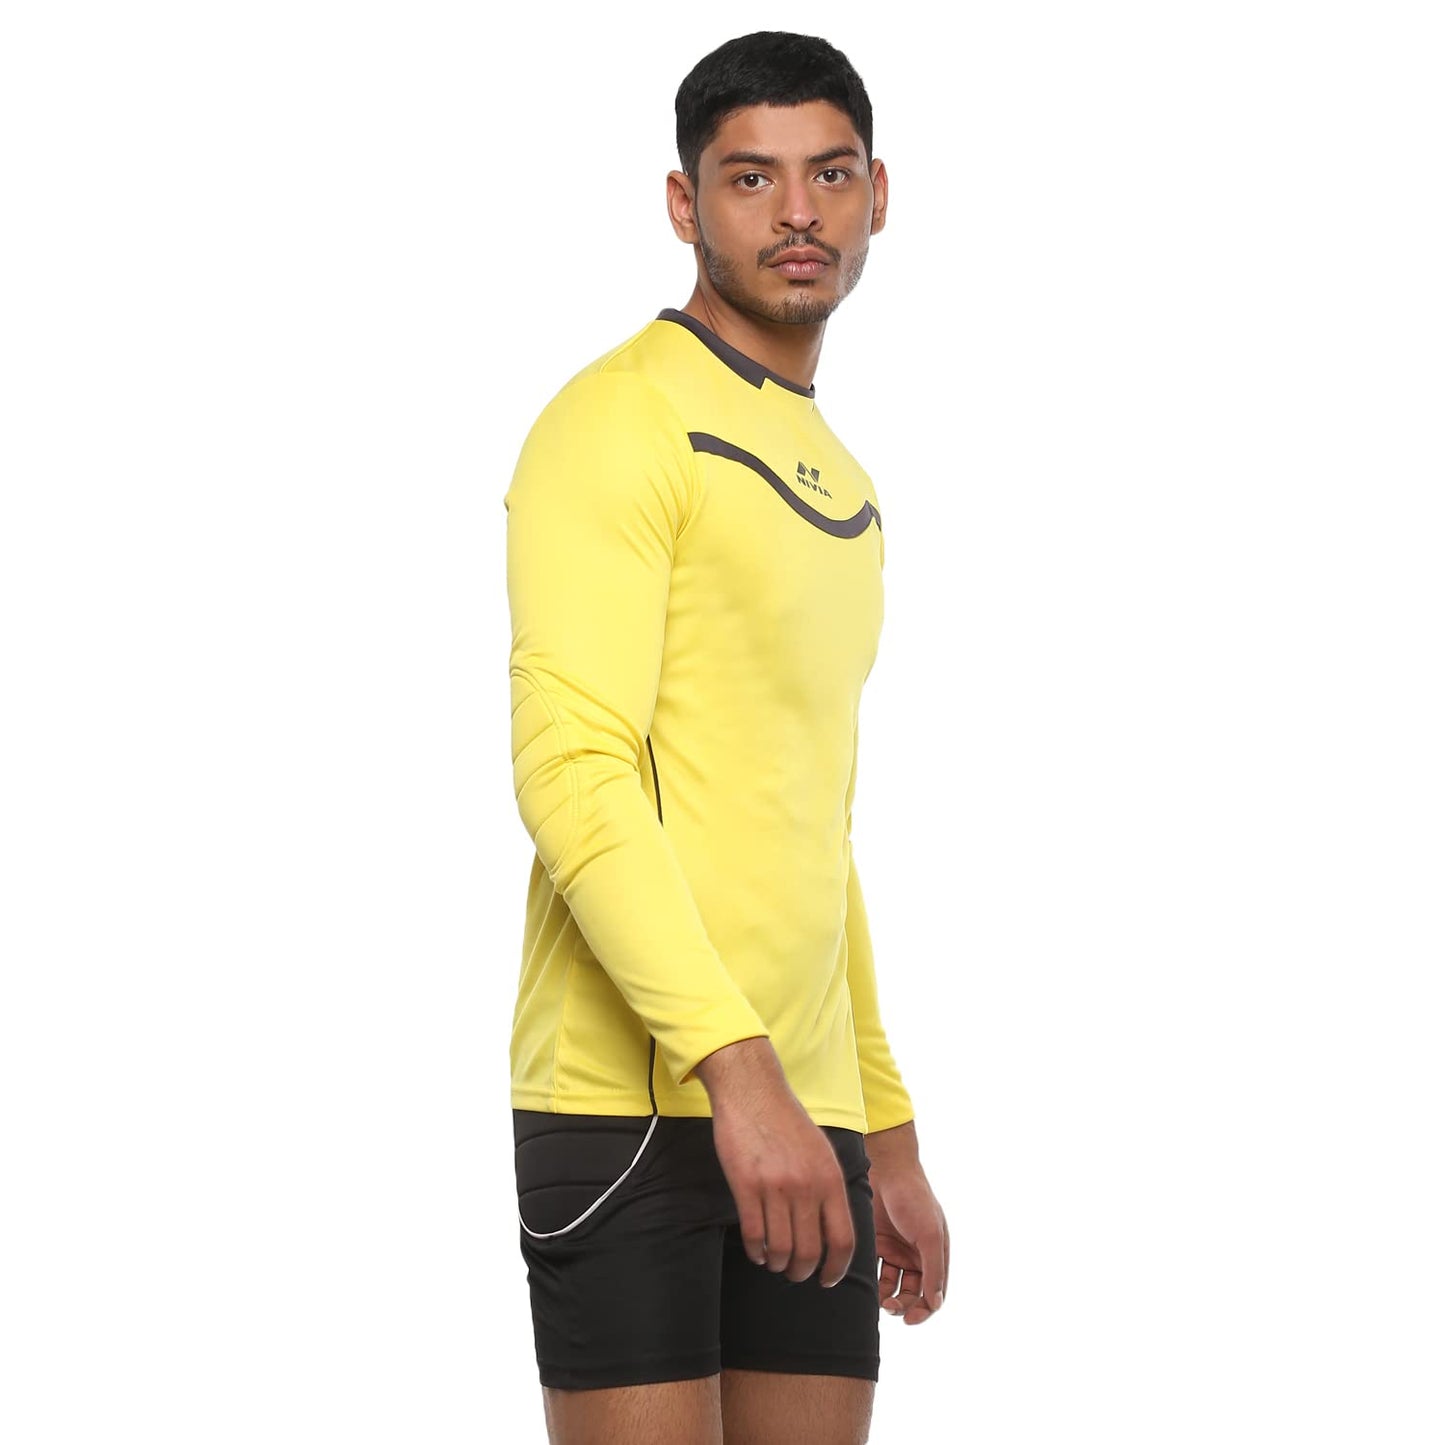 Nivia Armour Goal Keeper Jersey, Yellow/Black - Best Price online Prokicksports.com